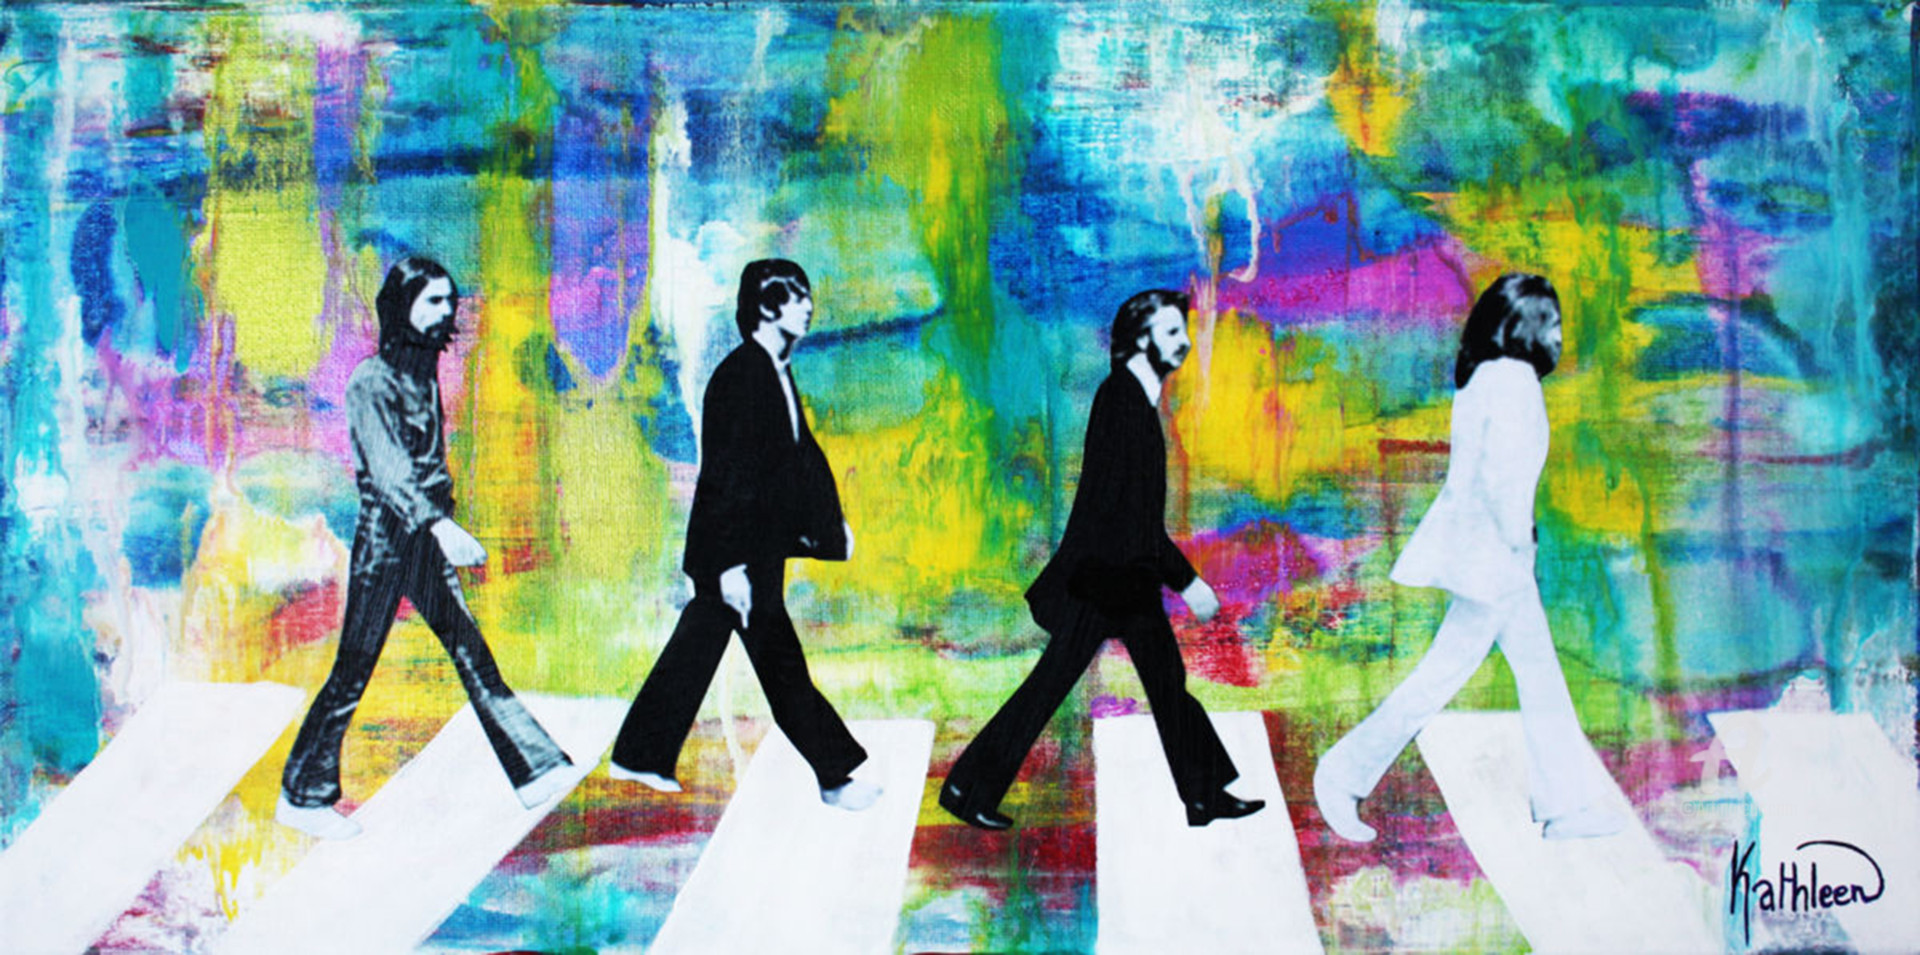 Beatles Painting Painting by KATHLEEN ARTIST | Artmajeur